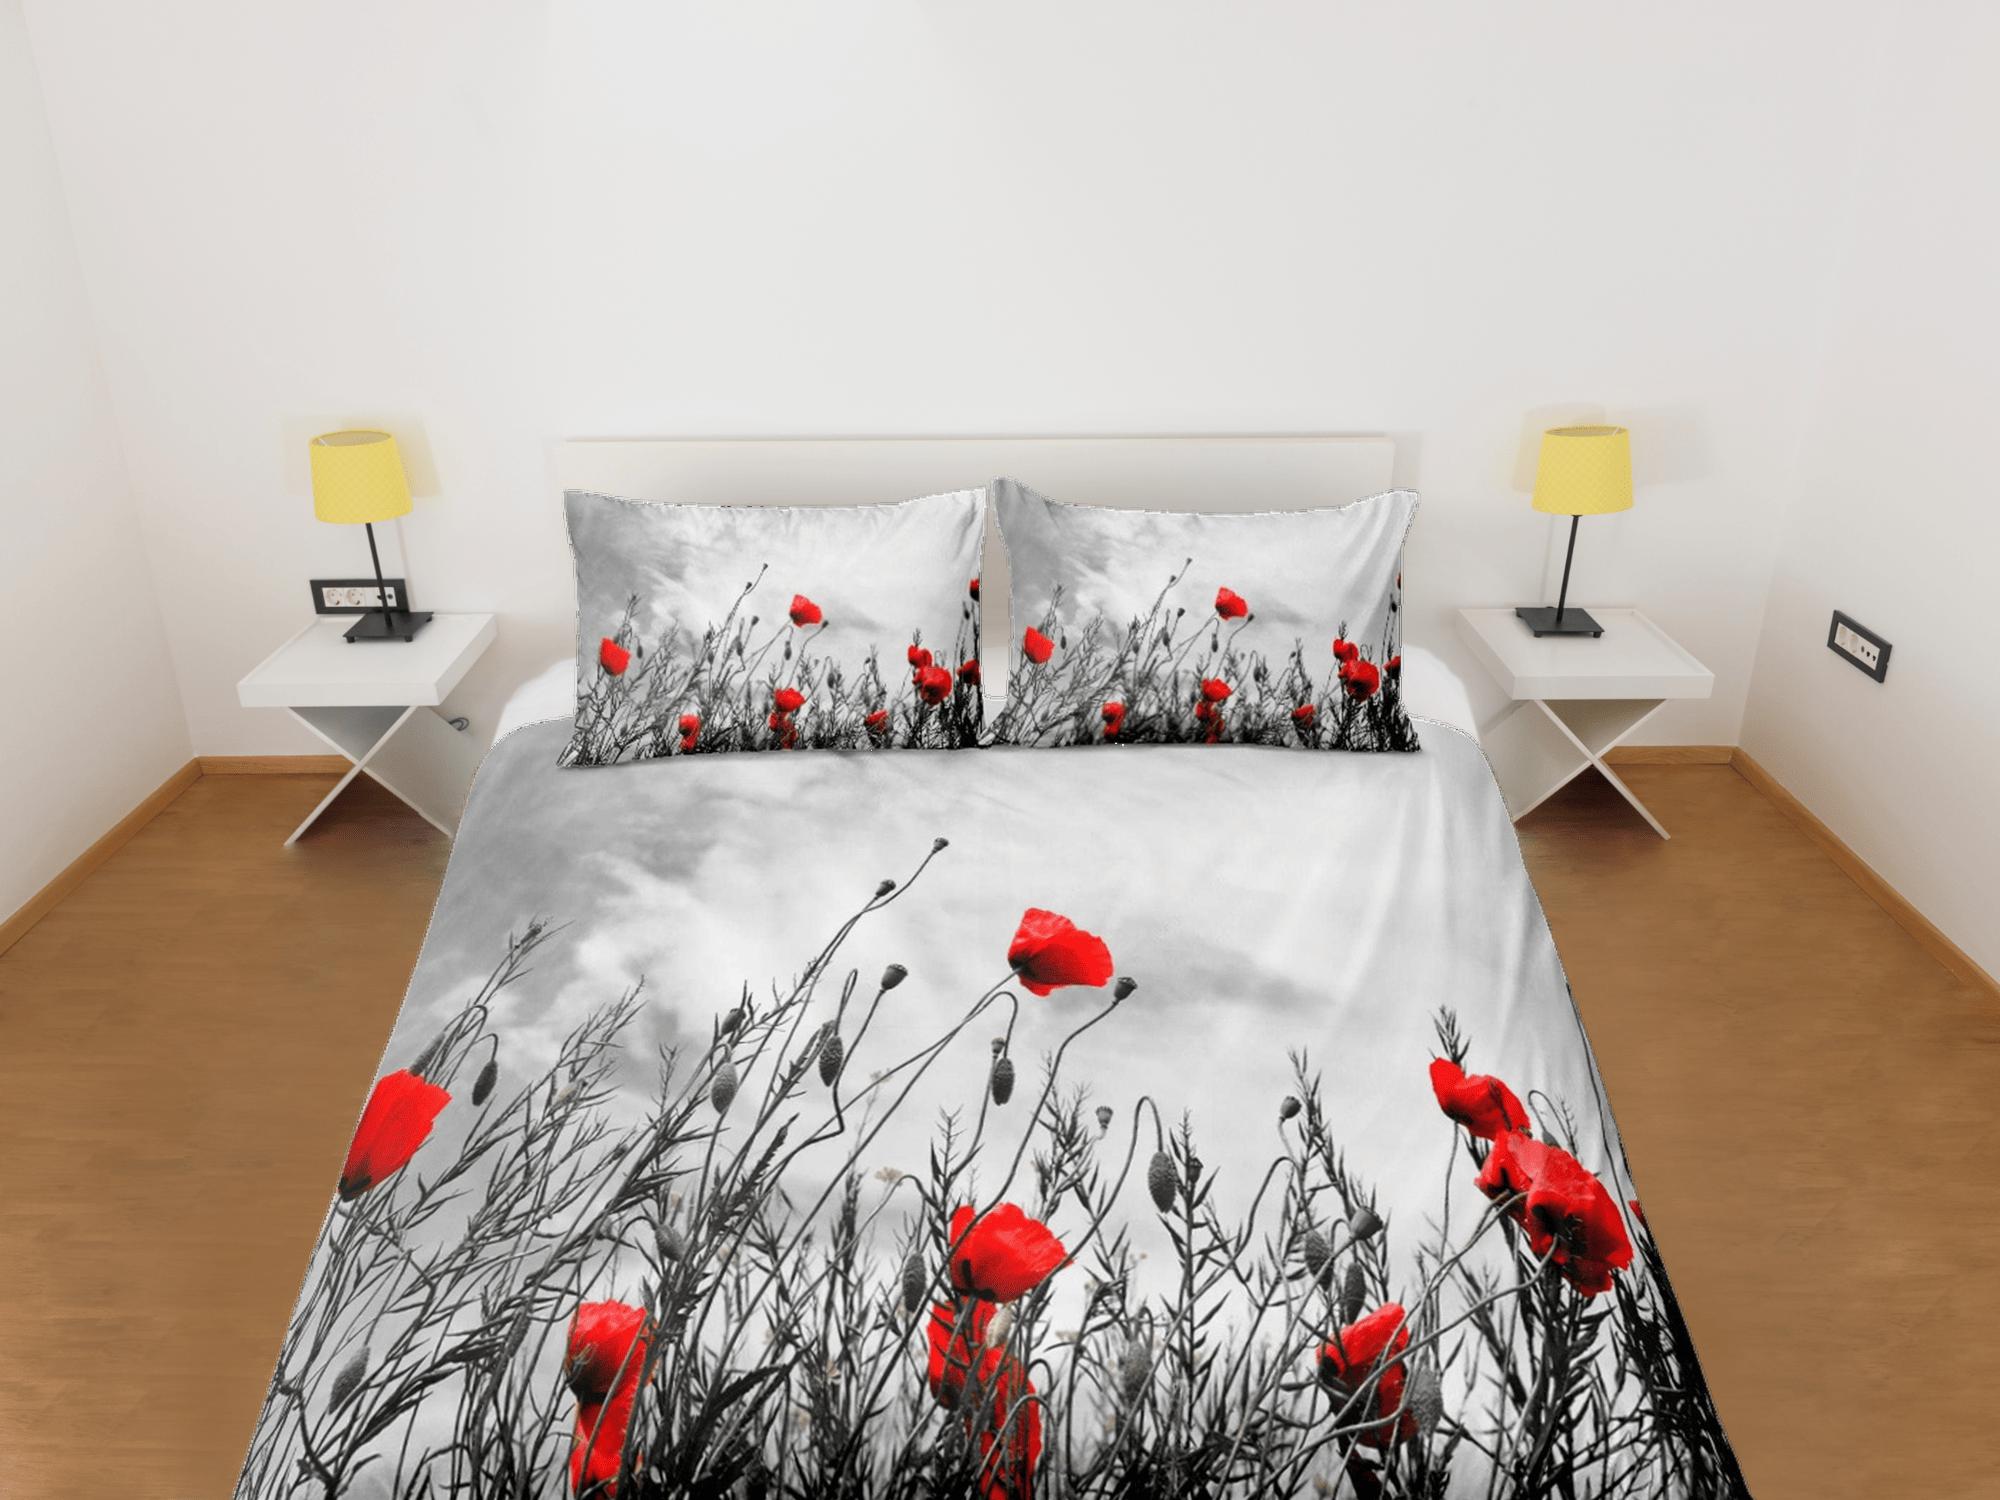 daintyduvet Red poppies nostalgic grey duvet cover colorful bedding, teen girl bedroom, baby girl crib bedding boho maximalist bedspread aesthetic